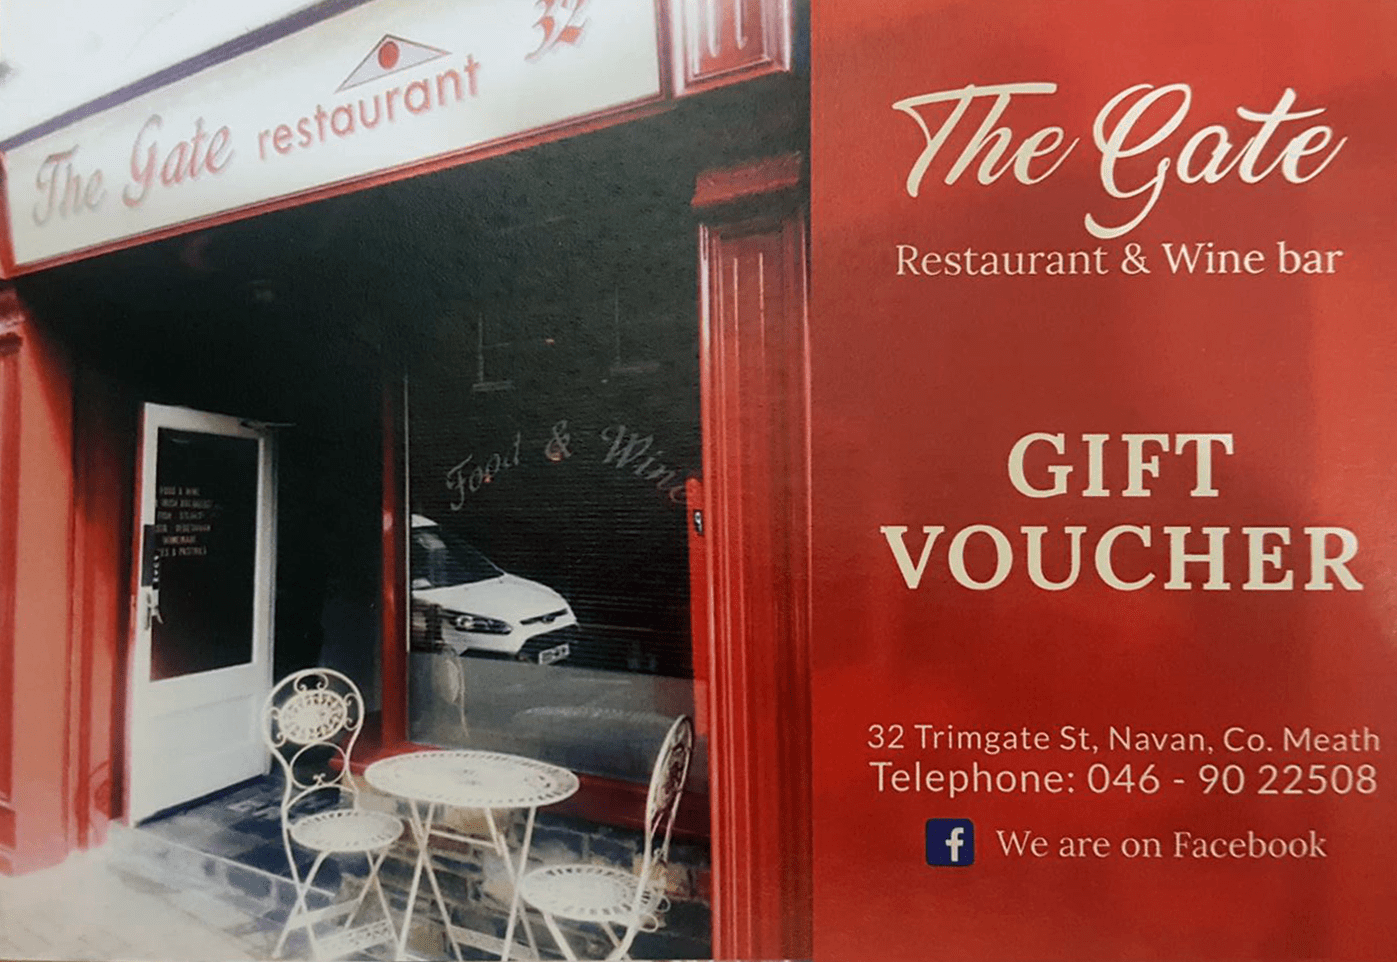 The Gate Restaurant Gift Voucher